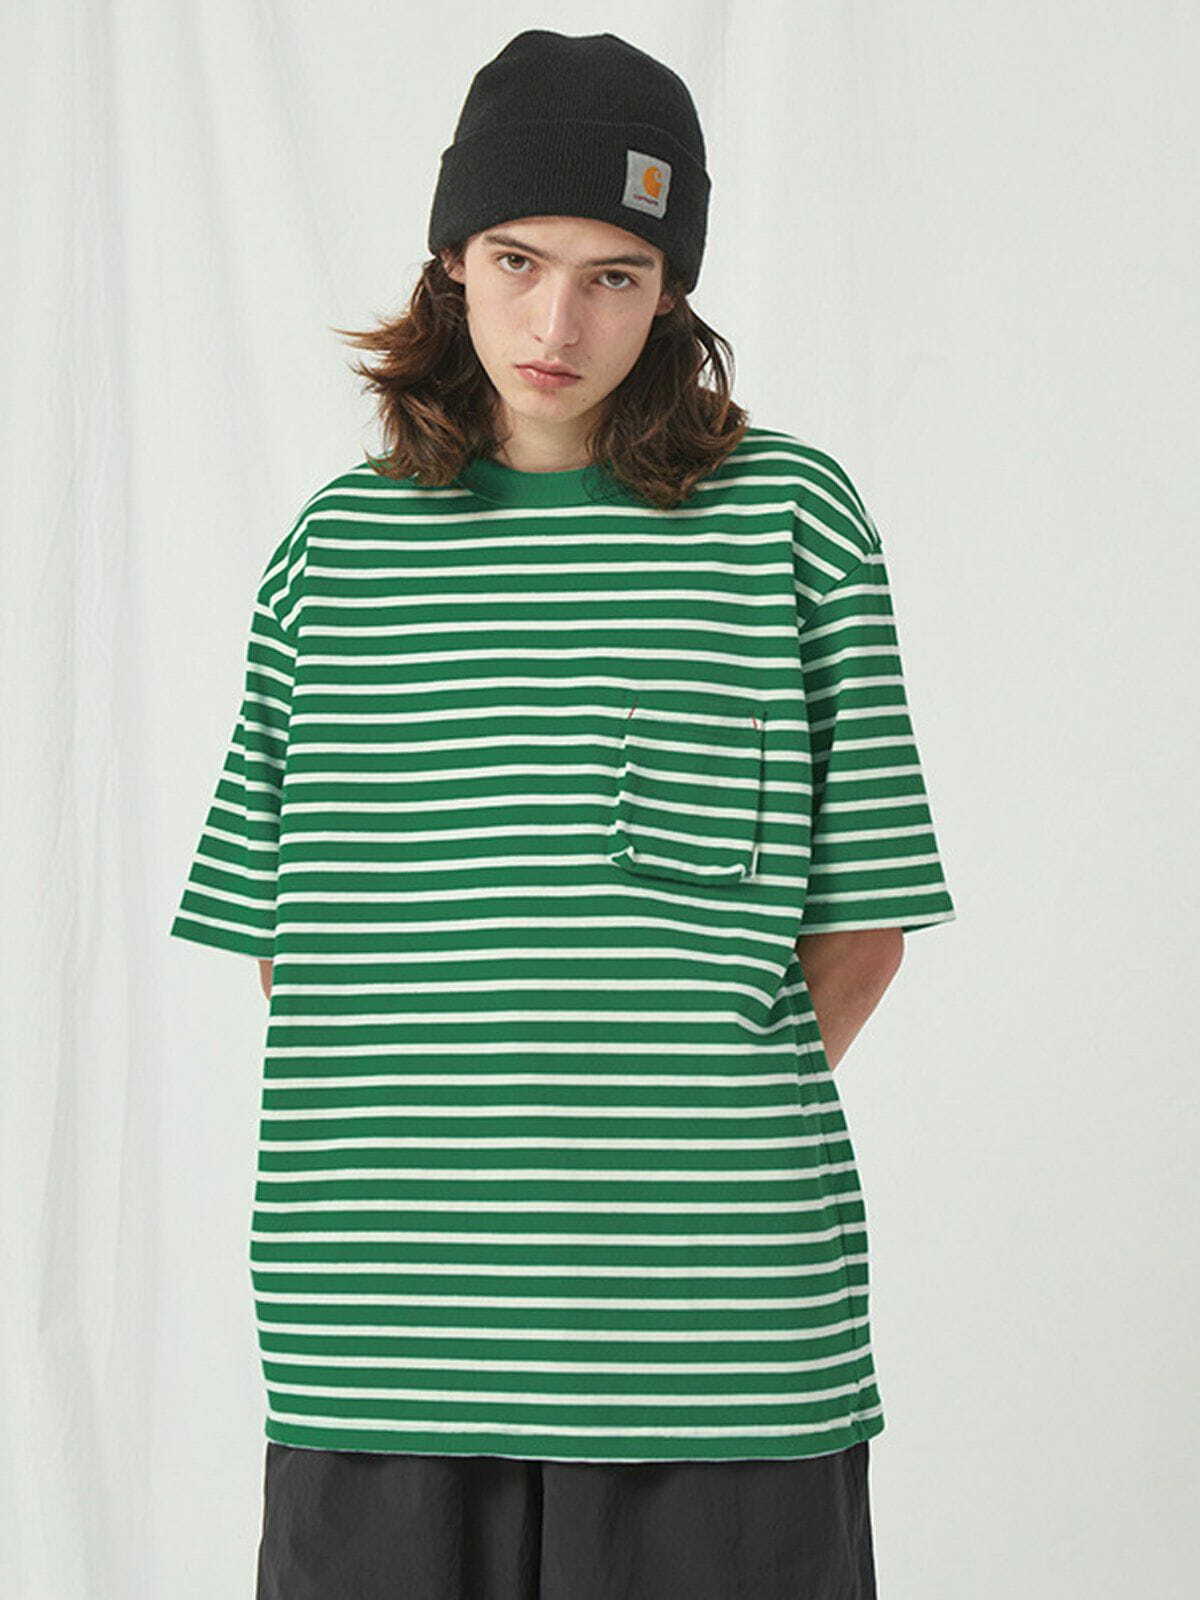 colorblock stripe tee retroinspired and vibrant streetwear 5773